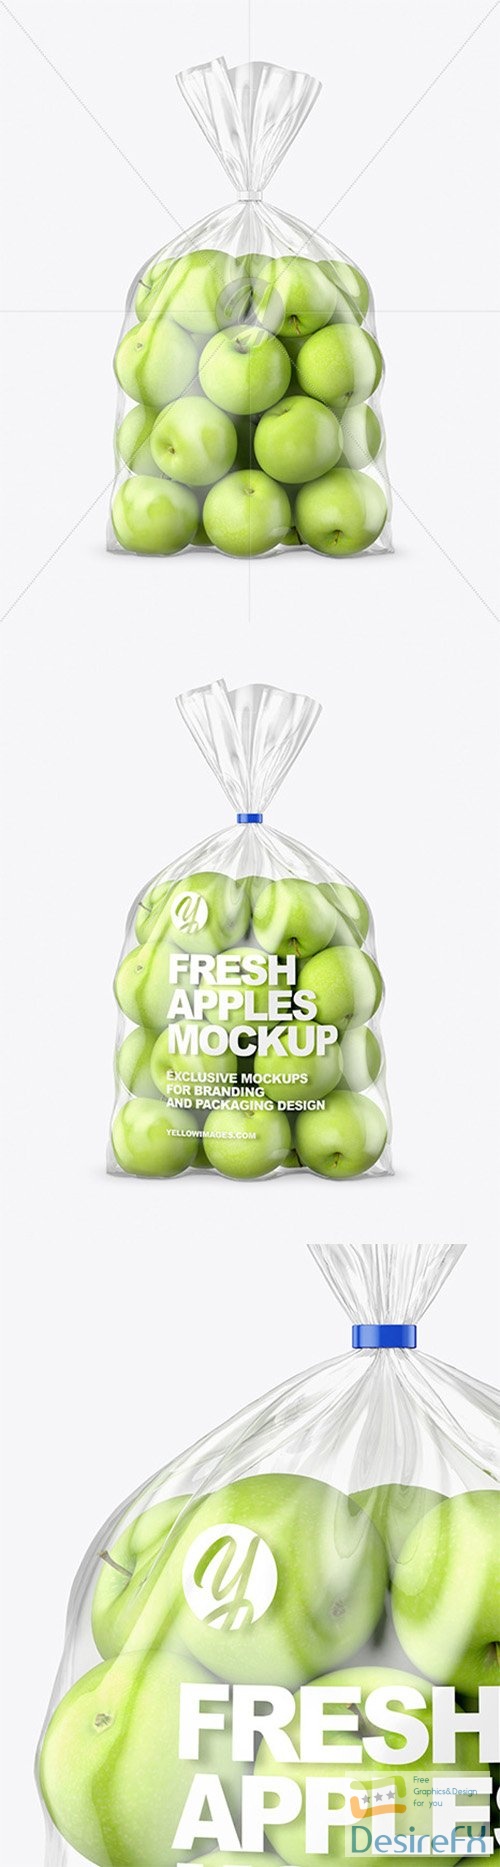 Plastic Bag with Green Apples Mockup 66987 TIF